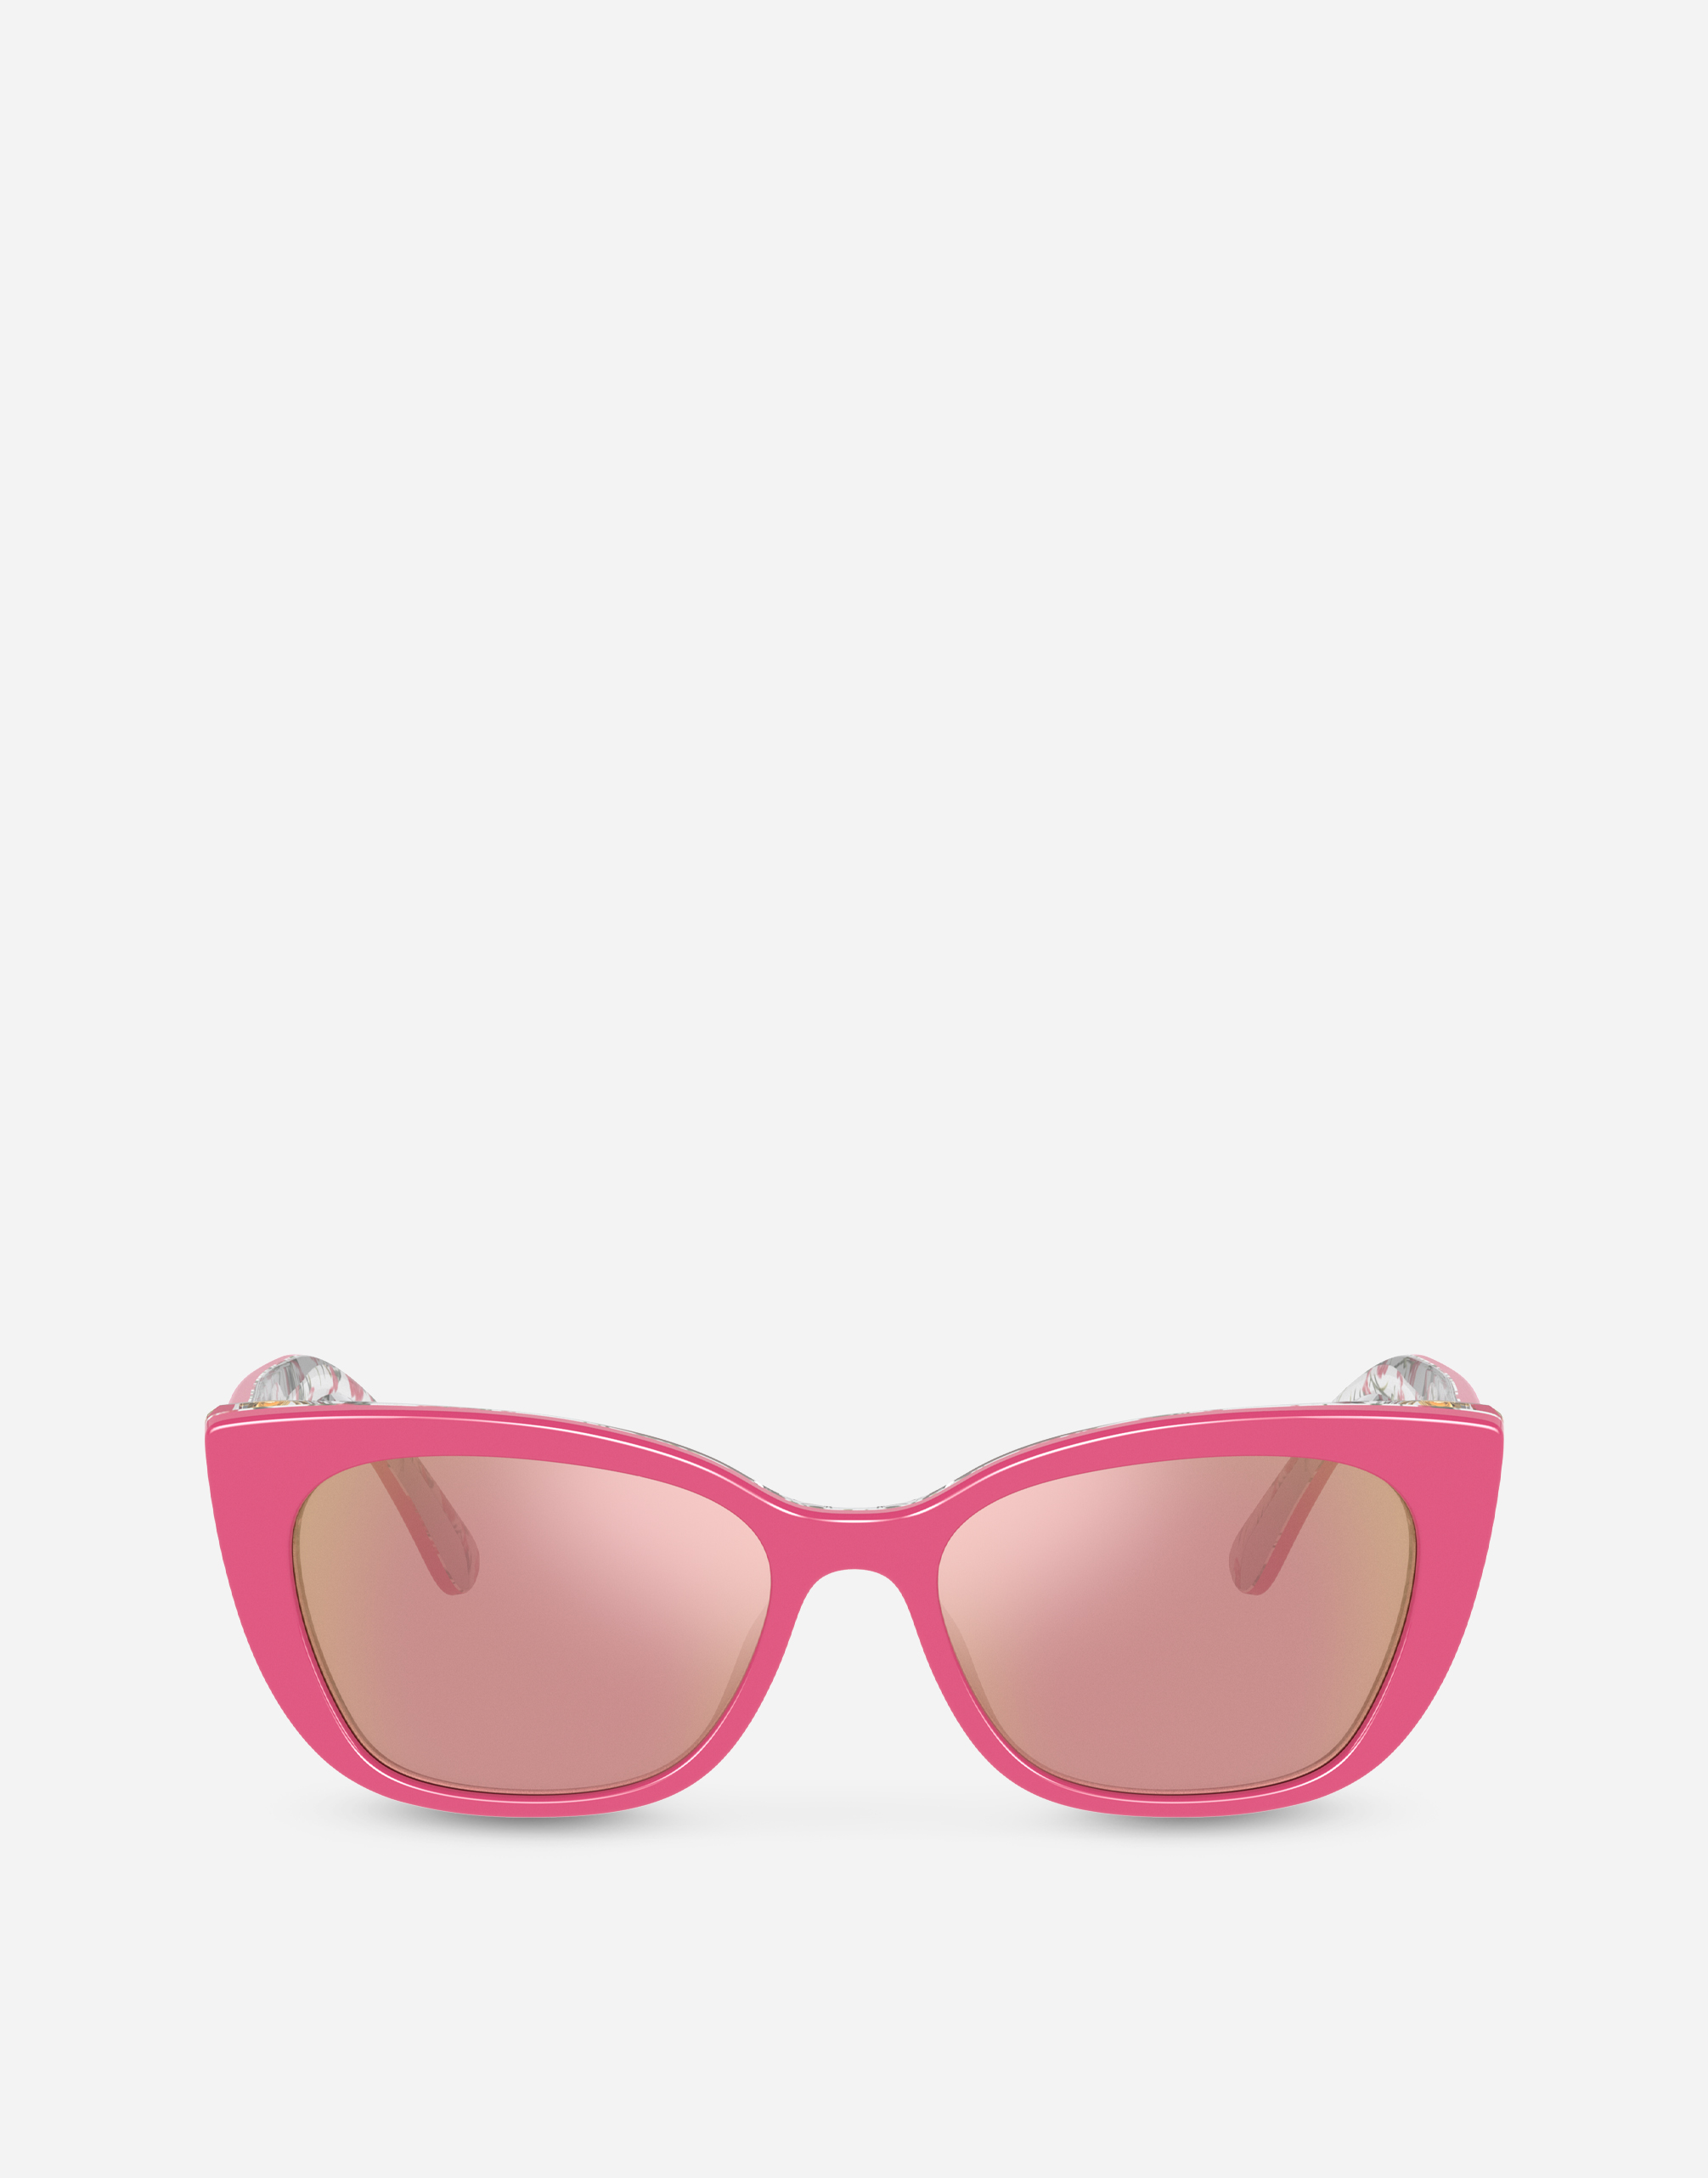 Happy Garden Sunglasses in Pink on flowers print